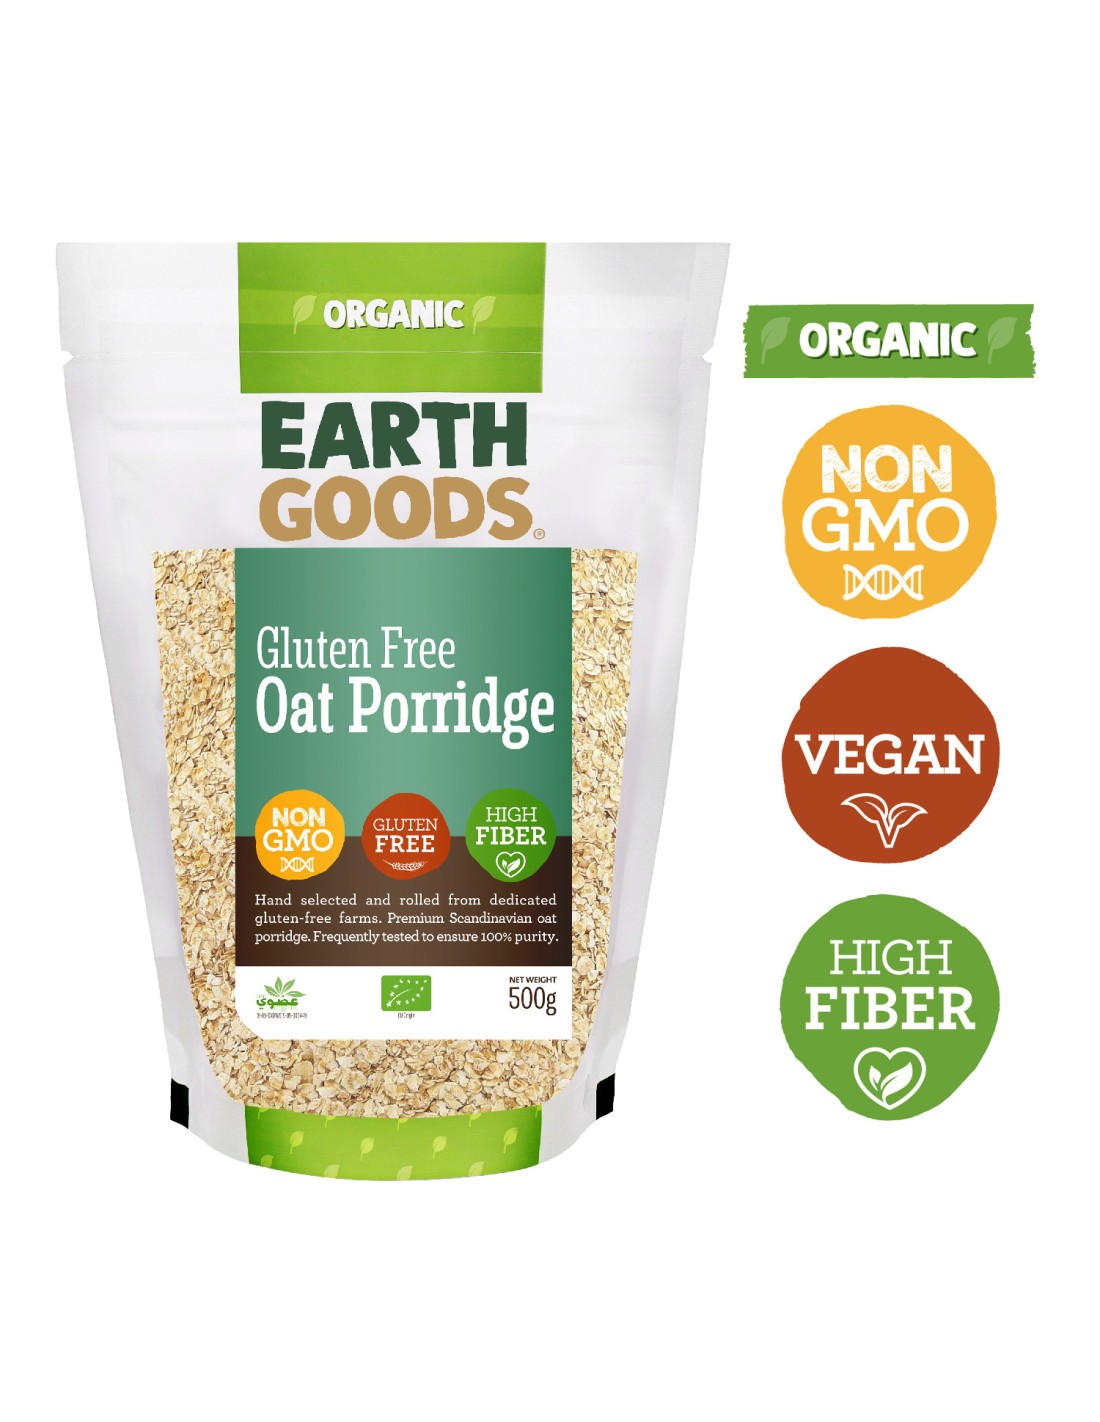 EARTH GOODS Organic Gluten Free Oat Porridge, 500g - Vegan, Non-GMO